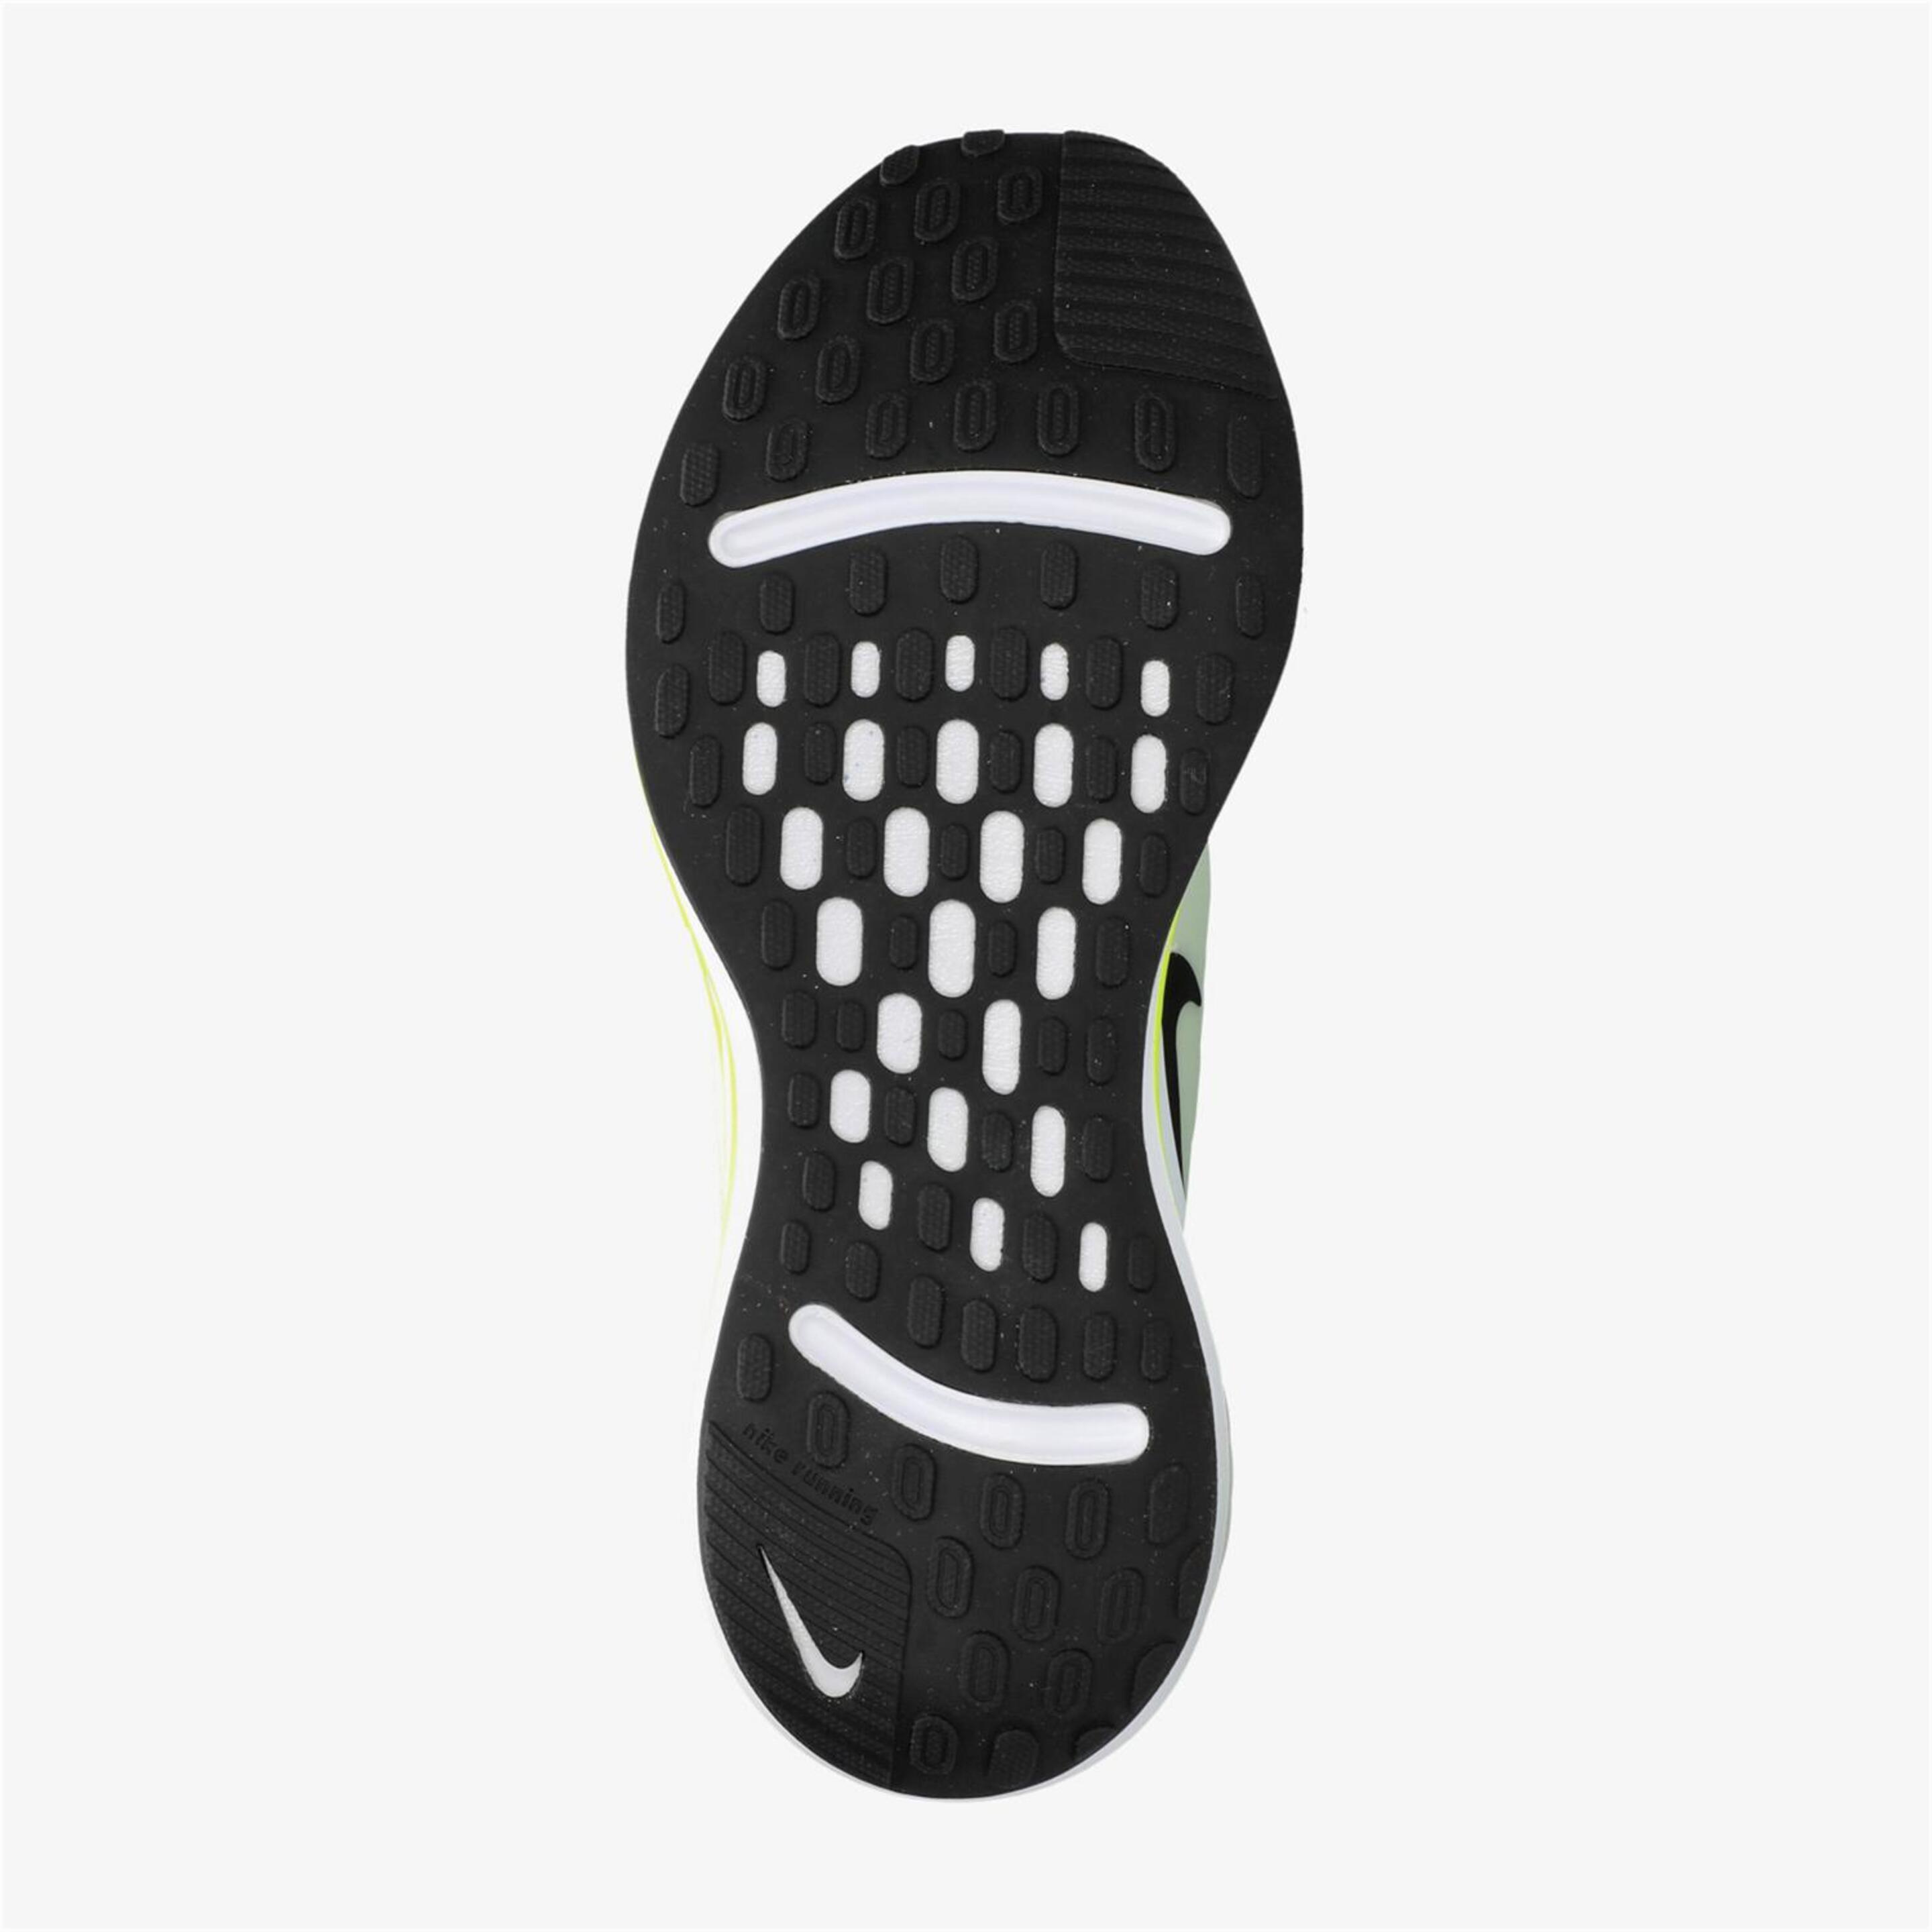 Nike Journey - Blanco - Zapatillas Running Hombre